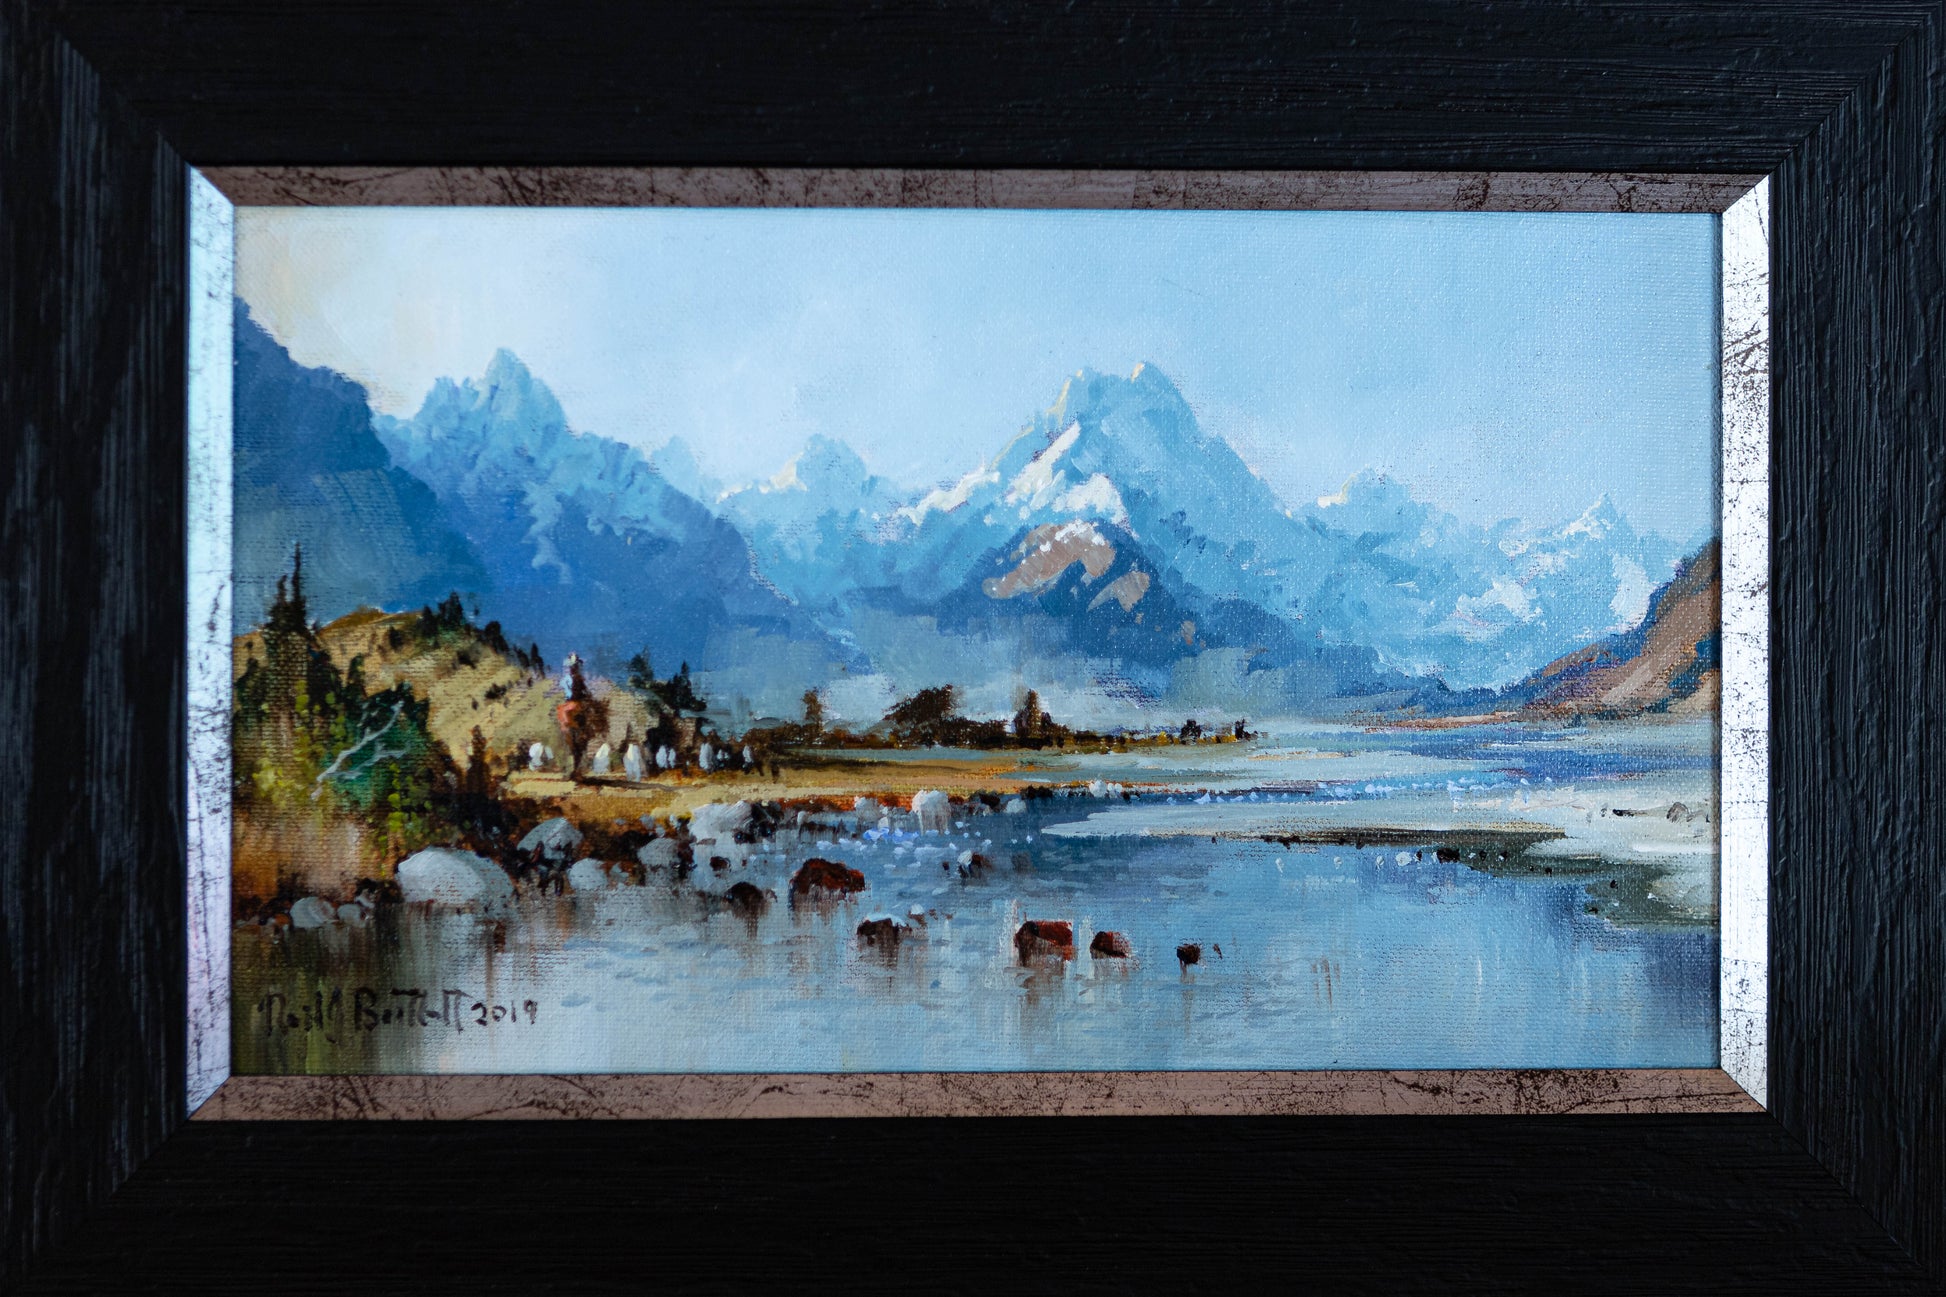 Framed Oil Painting by Neil J Bartlett of Mount Cook Silver Fern Gallery